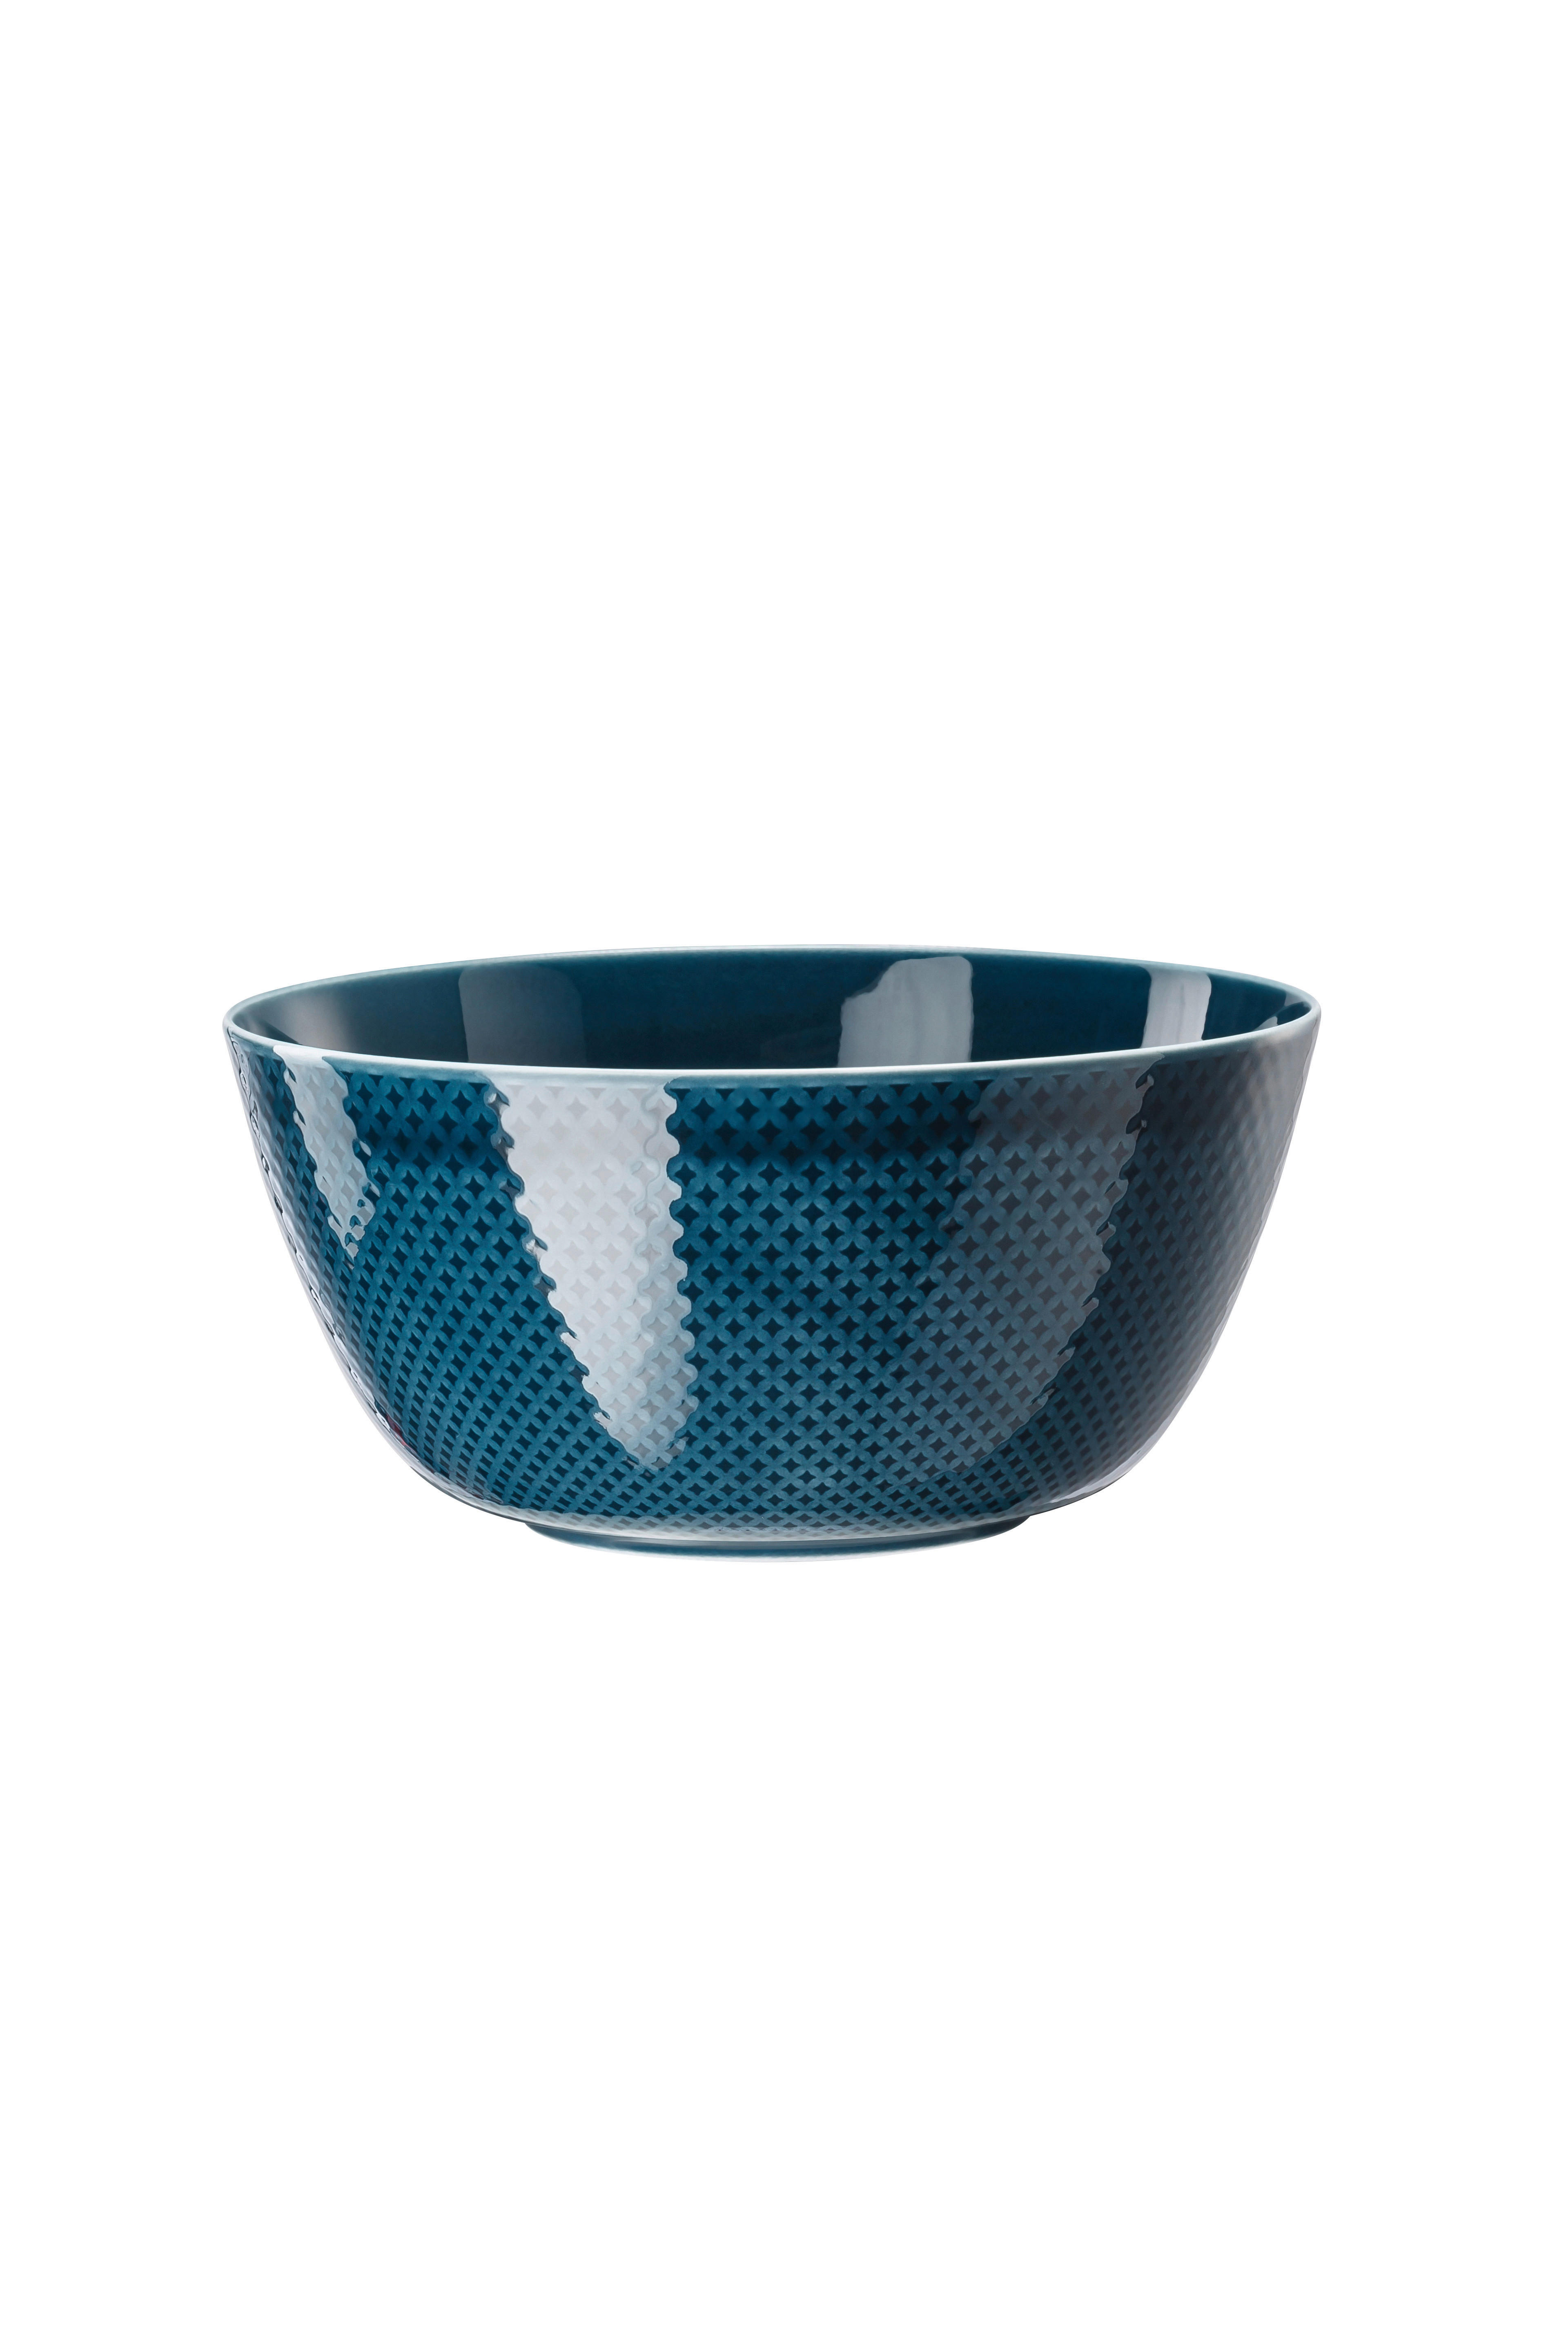 SCHÜSSEL Junto Ocean Blue  - Blau, Basics, Keramik (22cm) - Rosenthal